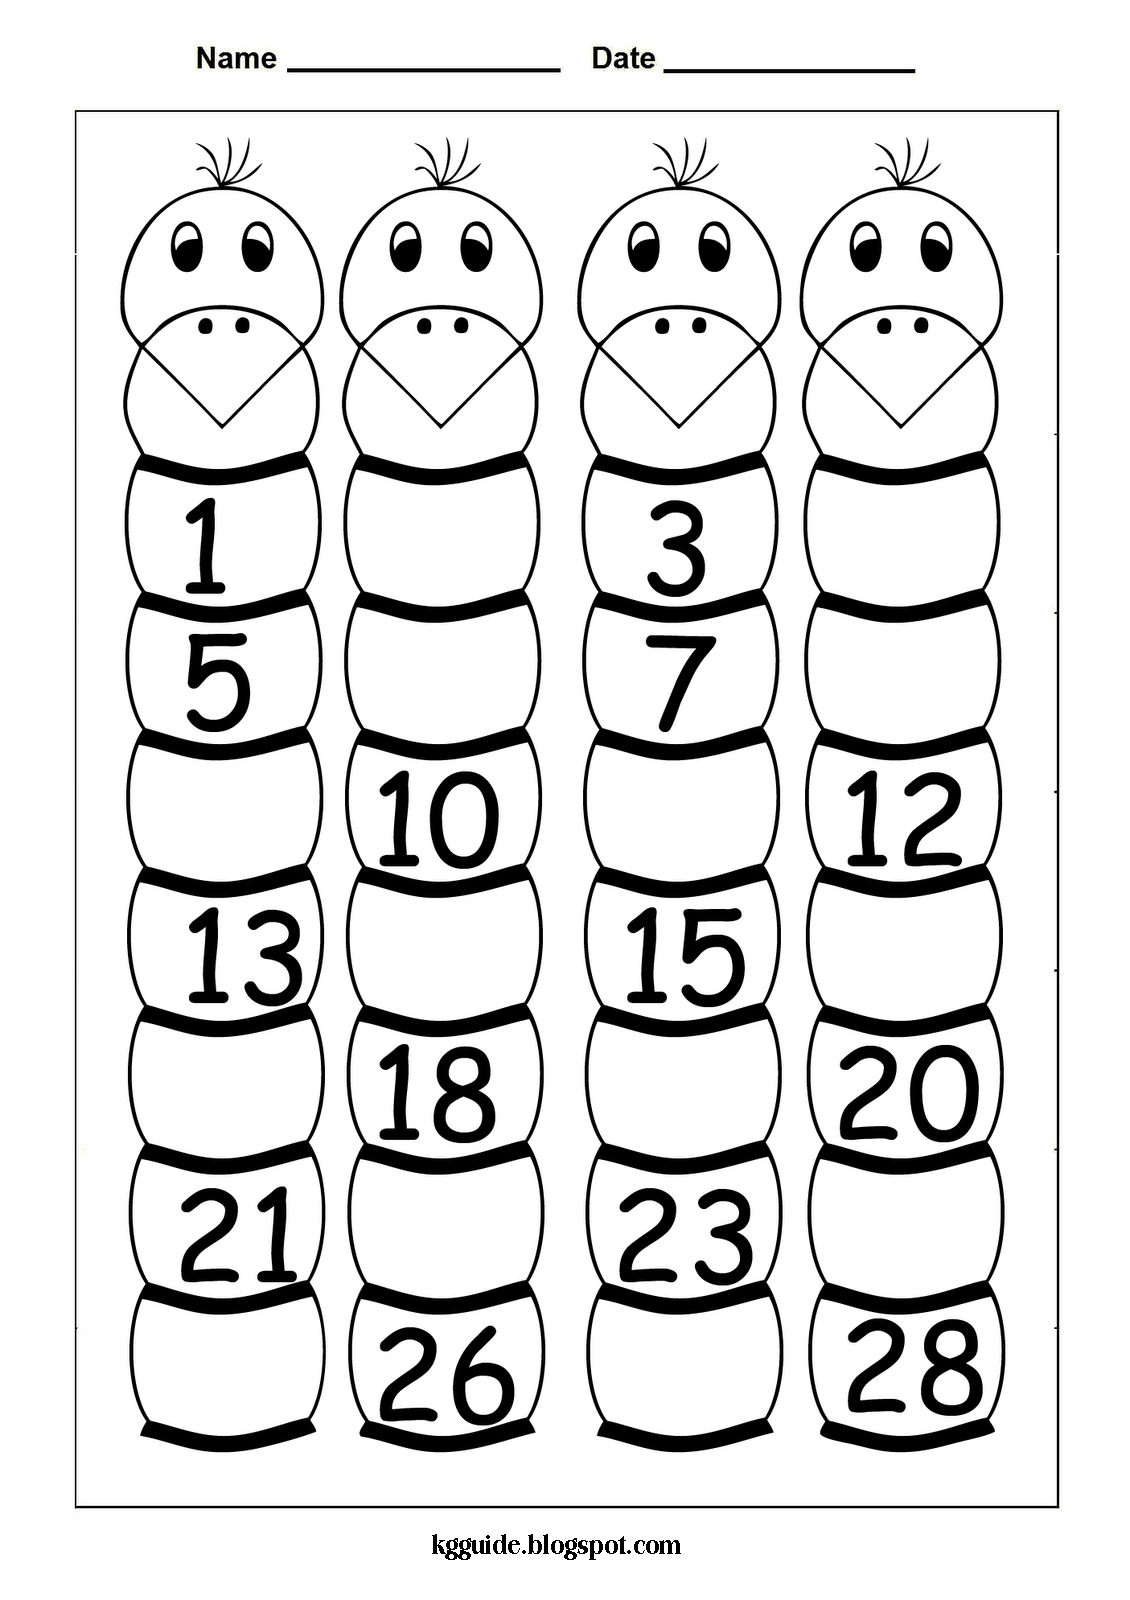 11-best-images-of-printable-count-by-2-worksheets-kindergarten-math-worksheets-missing-numbers